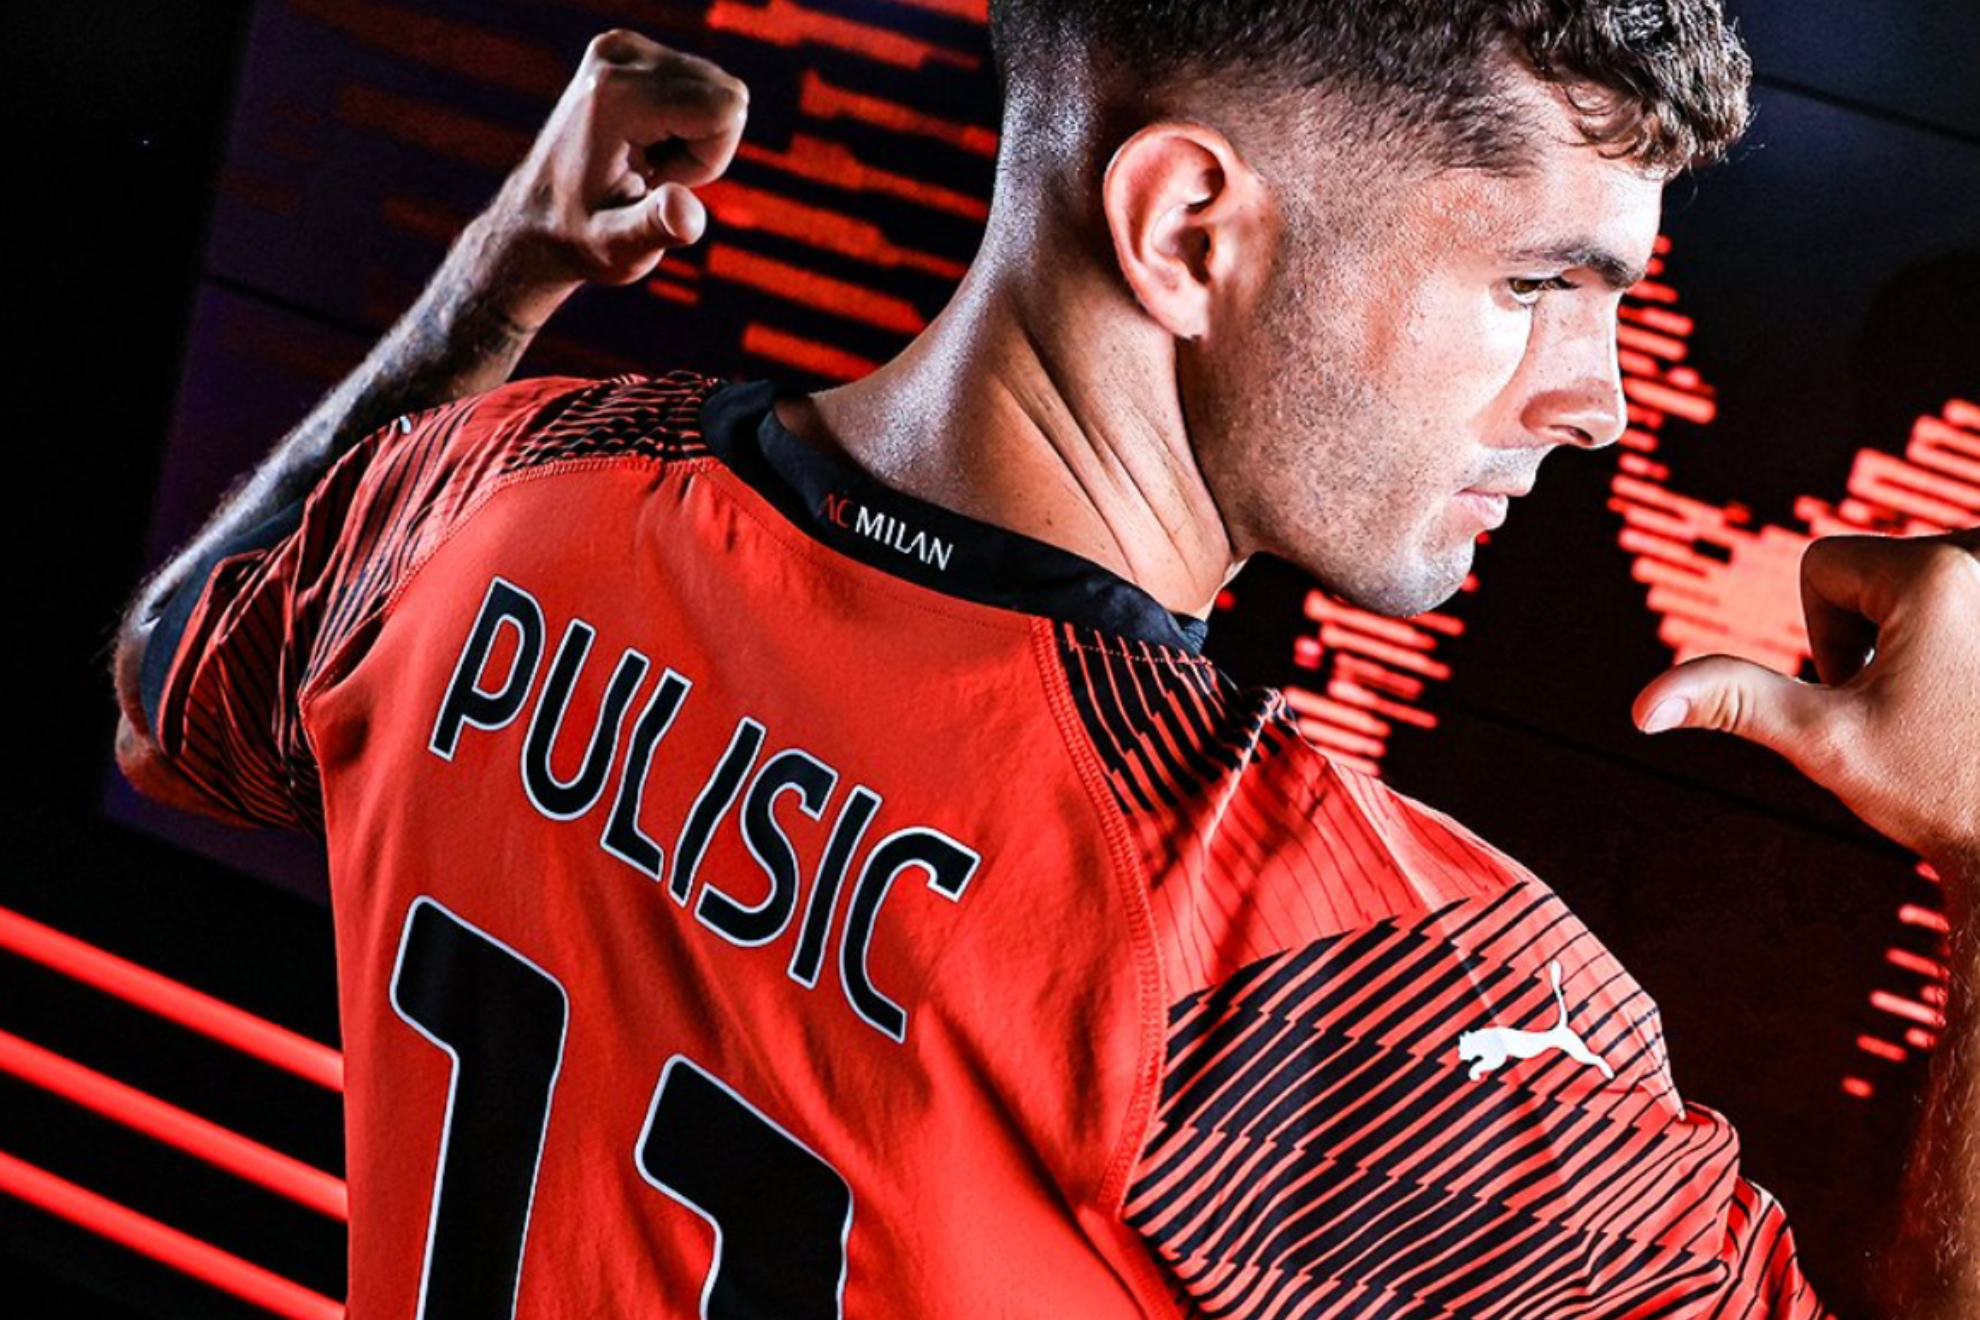 Pulisic will wear the #11 shirt at Milan.